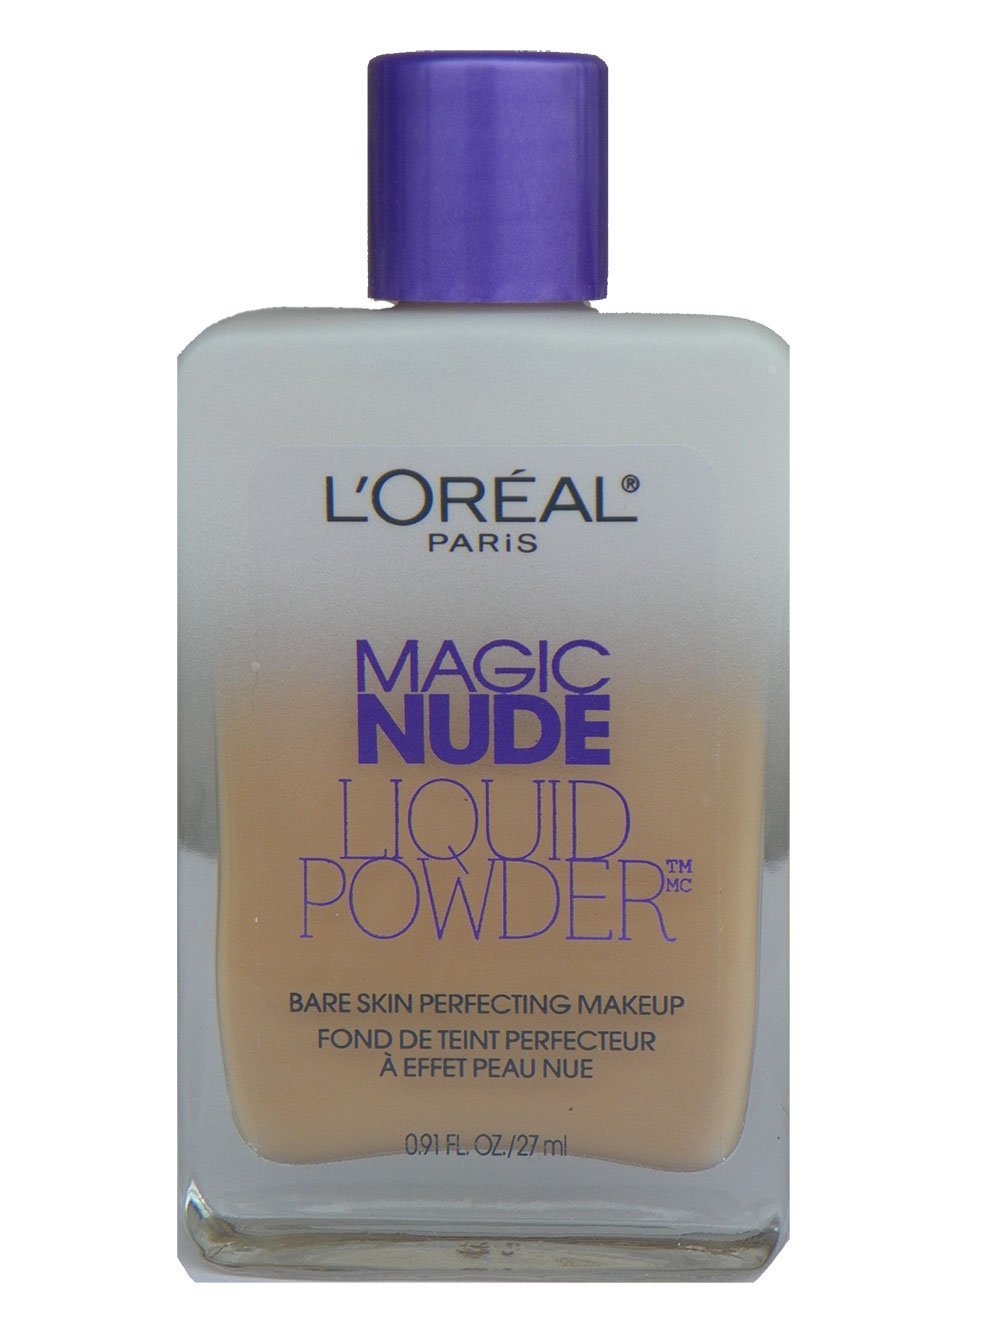 LOreal Magic Nude Liquid Powder Bare Skin Perfecting Makeup,True Beige 326